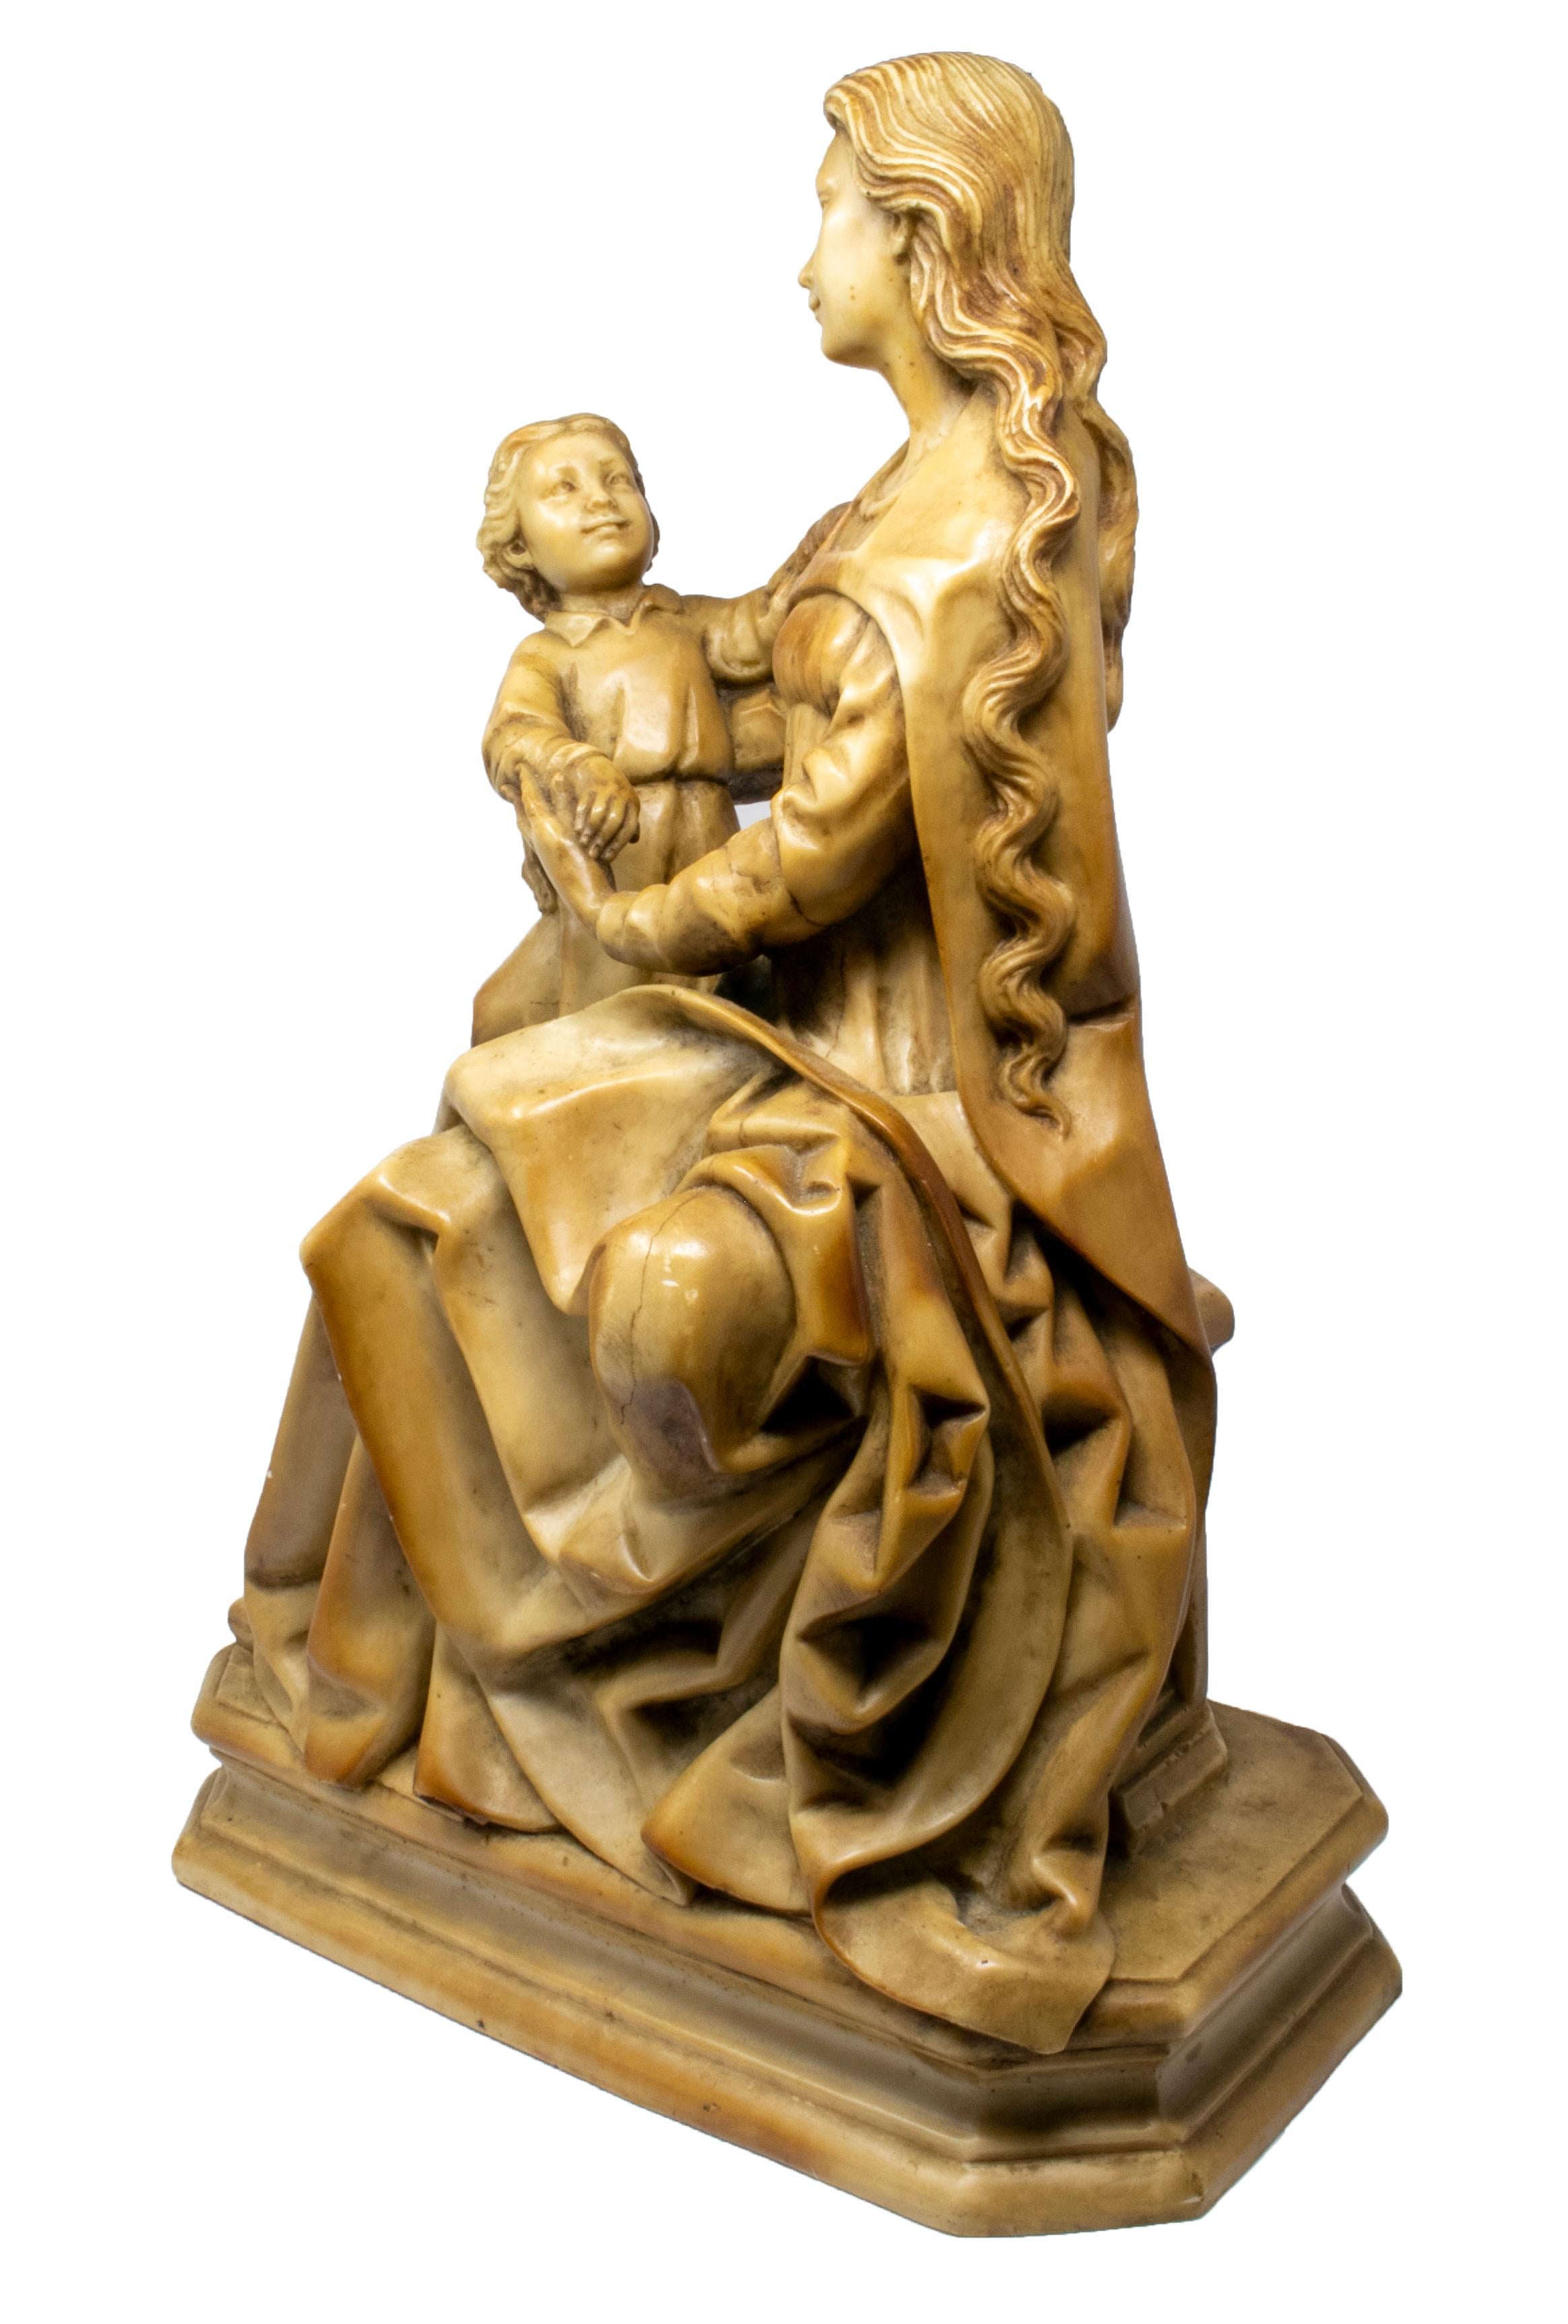 19th century Italian alabaster Gothic revival virgin and child.